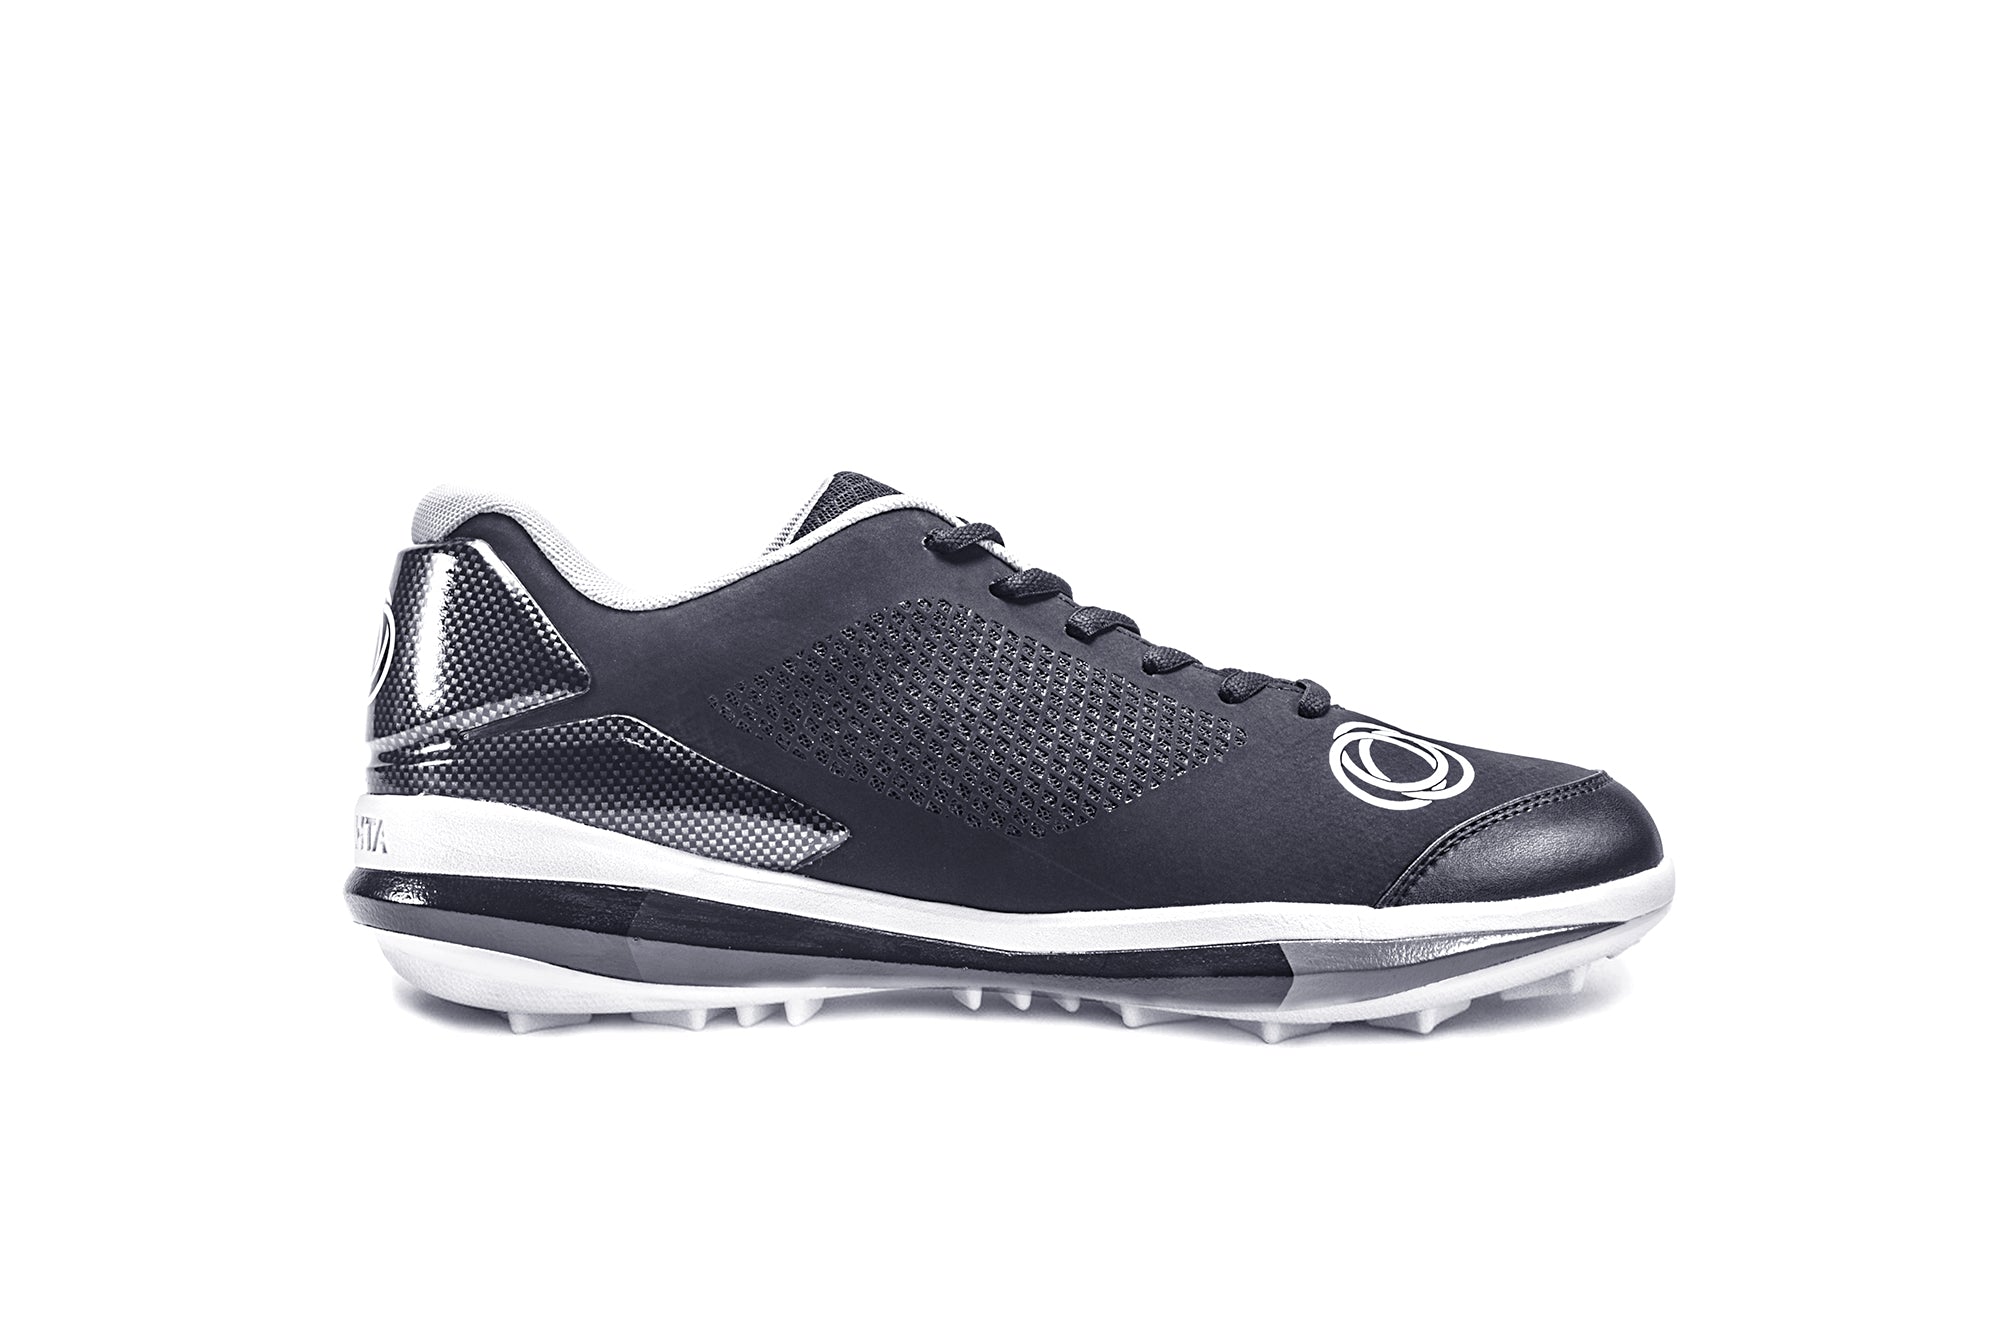 Athalonz GF1 Baseball & Softball Turf Shoes - Black